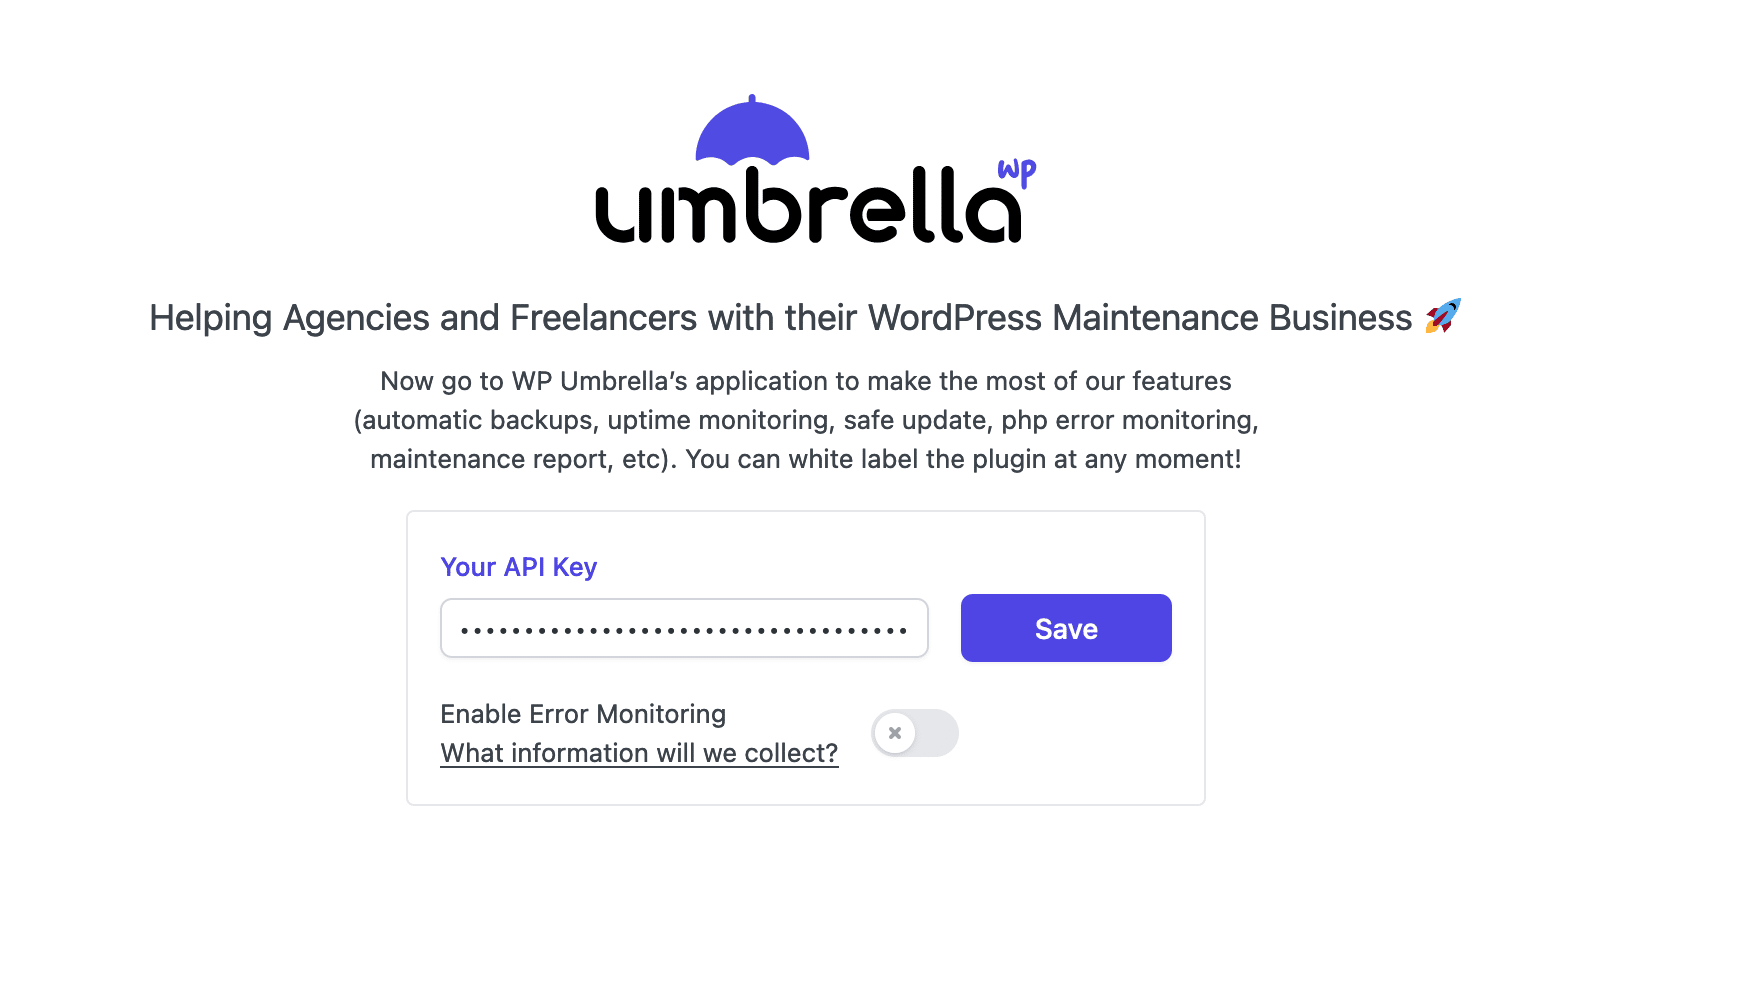 Save your WP Umbrella API Key.